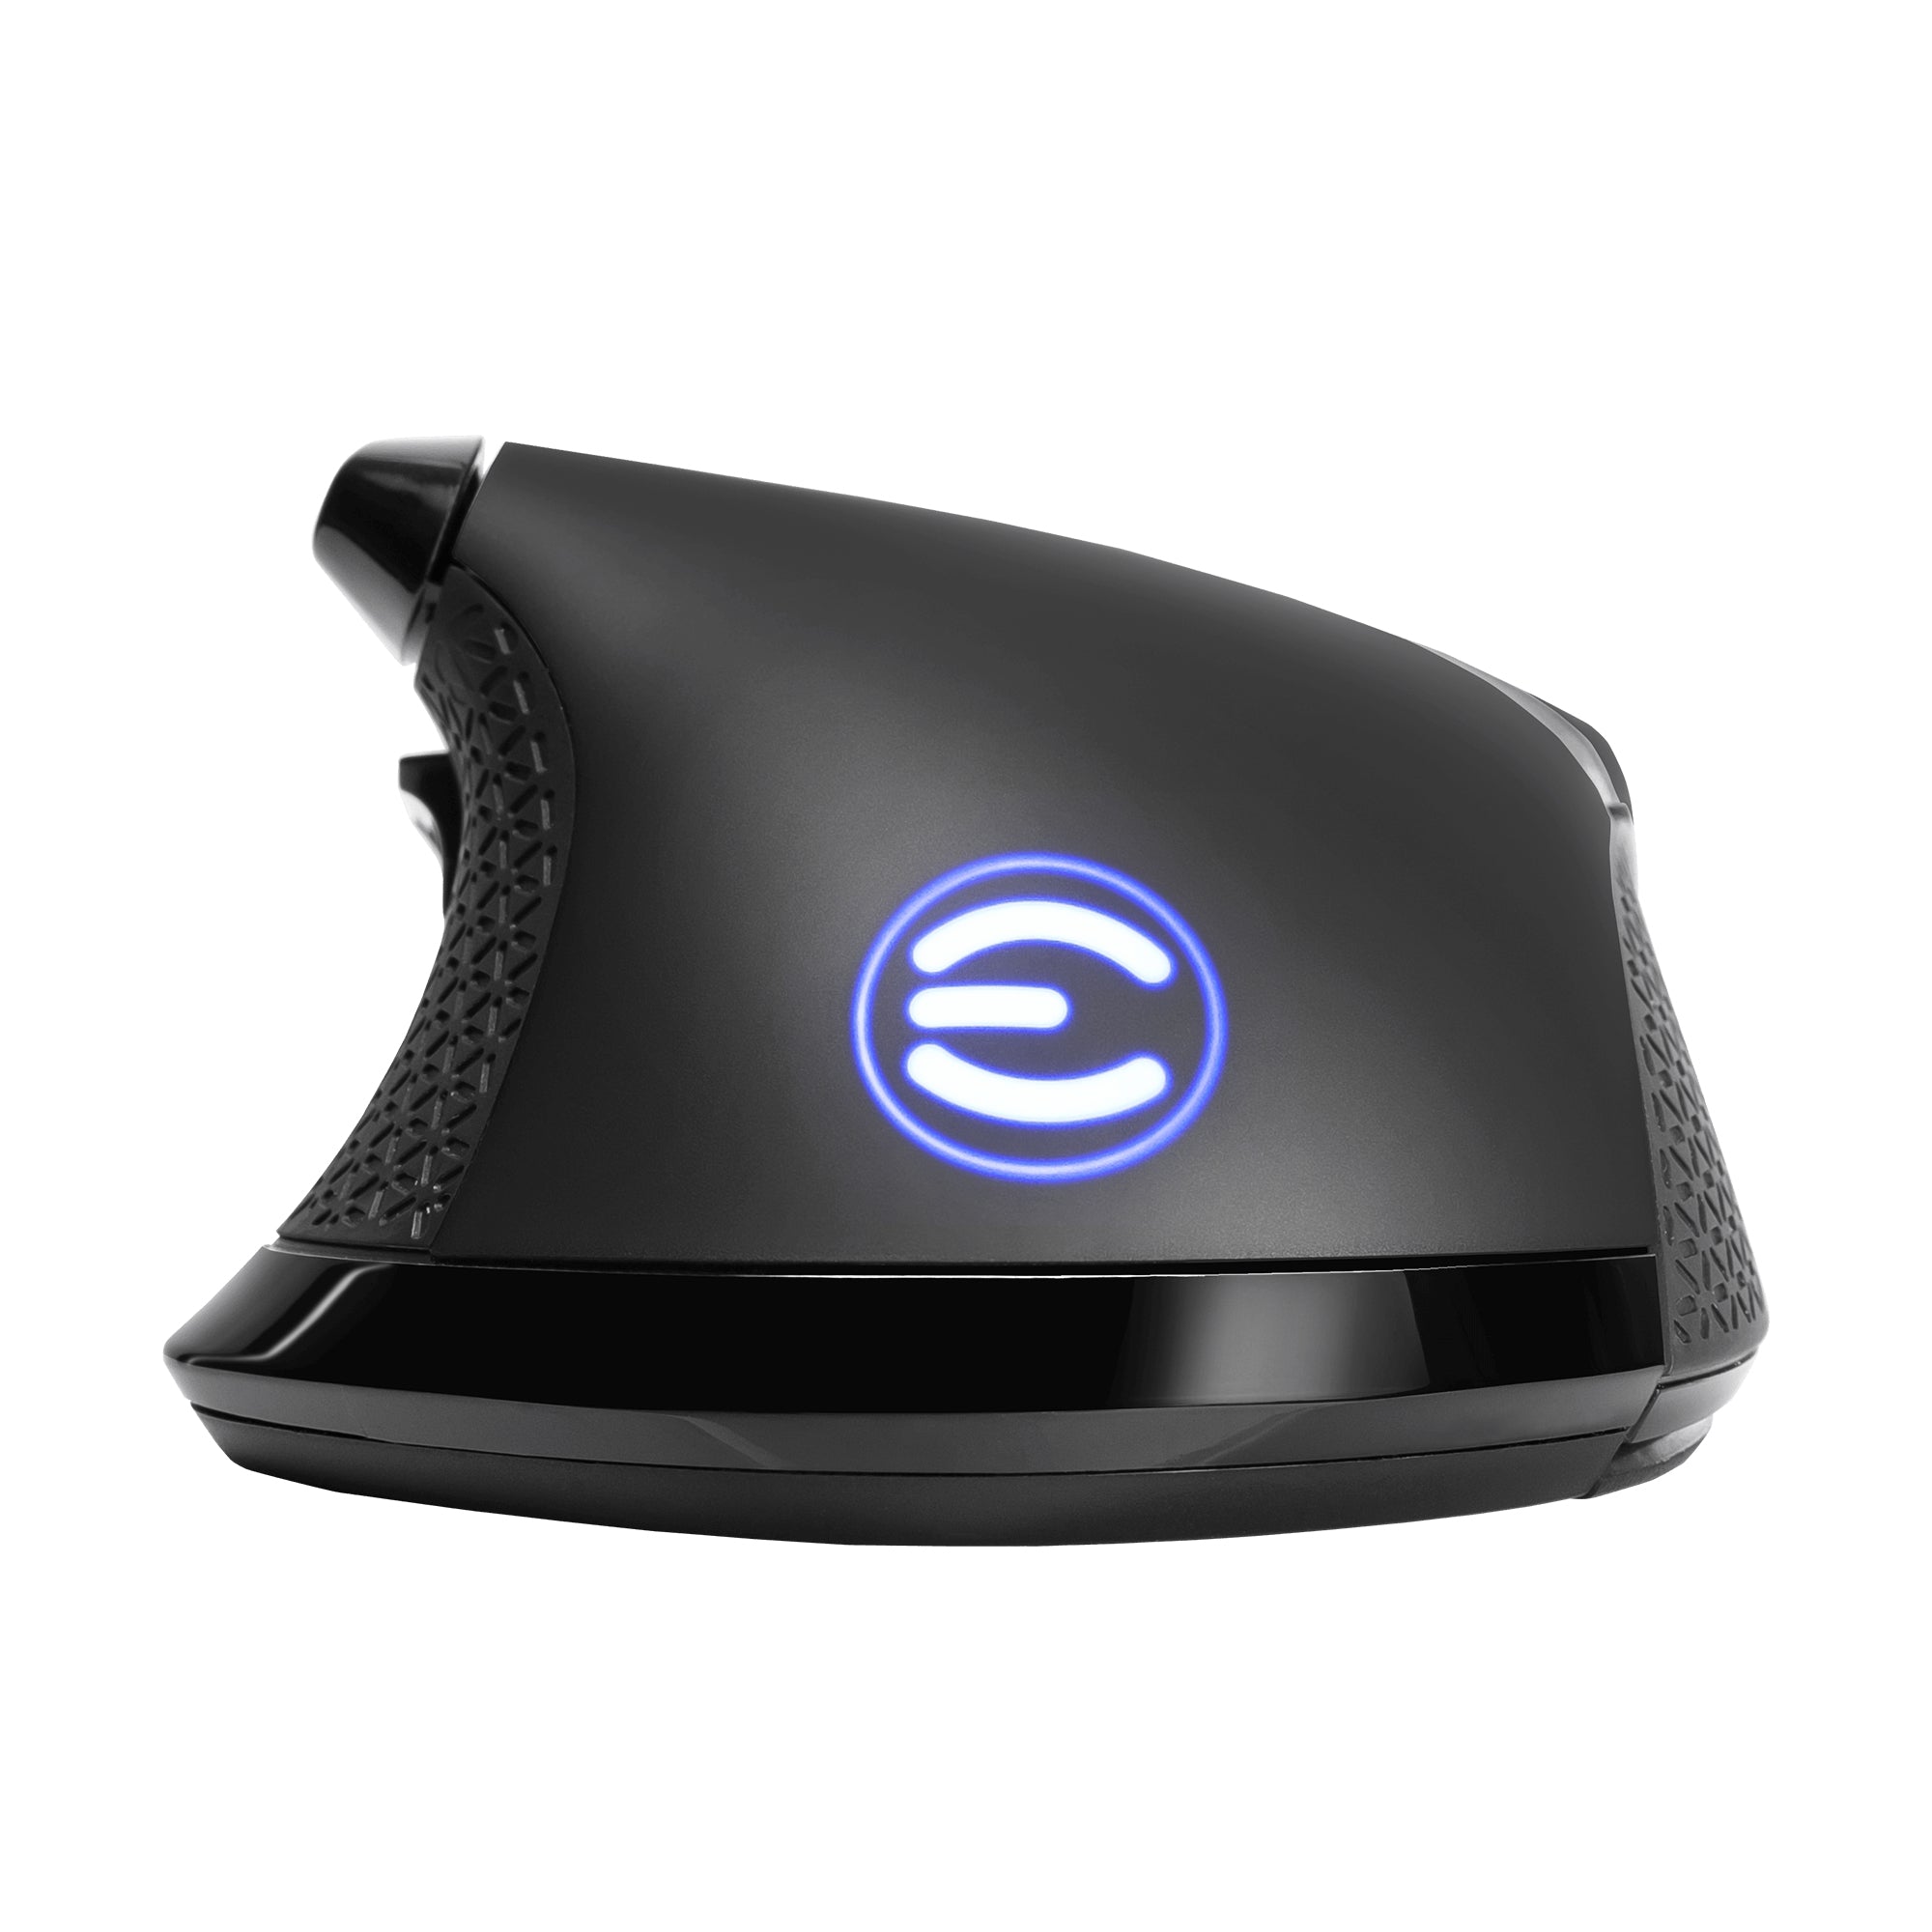 Mouse Evga X20 903-T1-20Bk-K3 10 Buttons, 16000 Dpi , 400 Ips Black